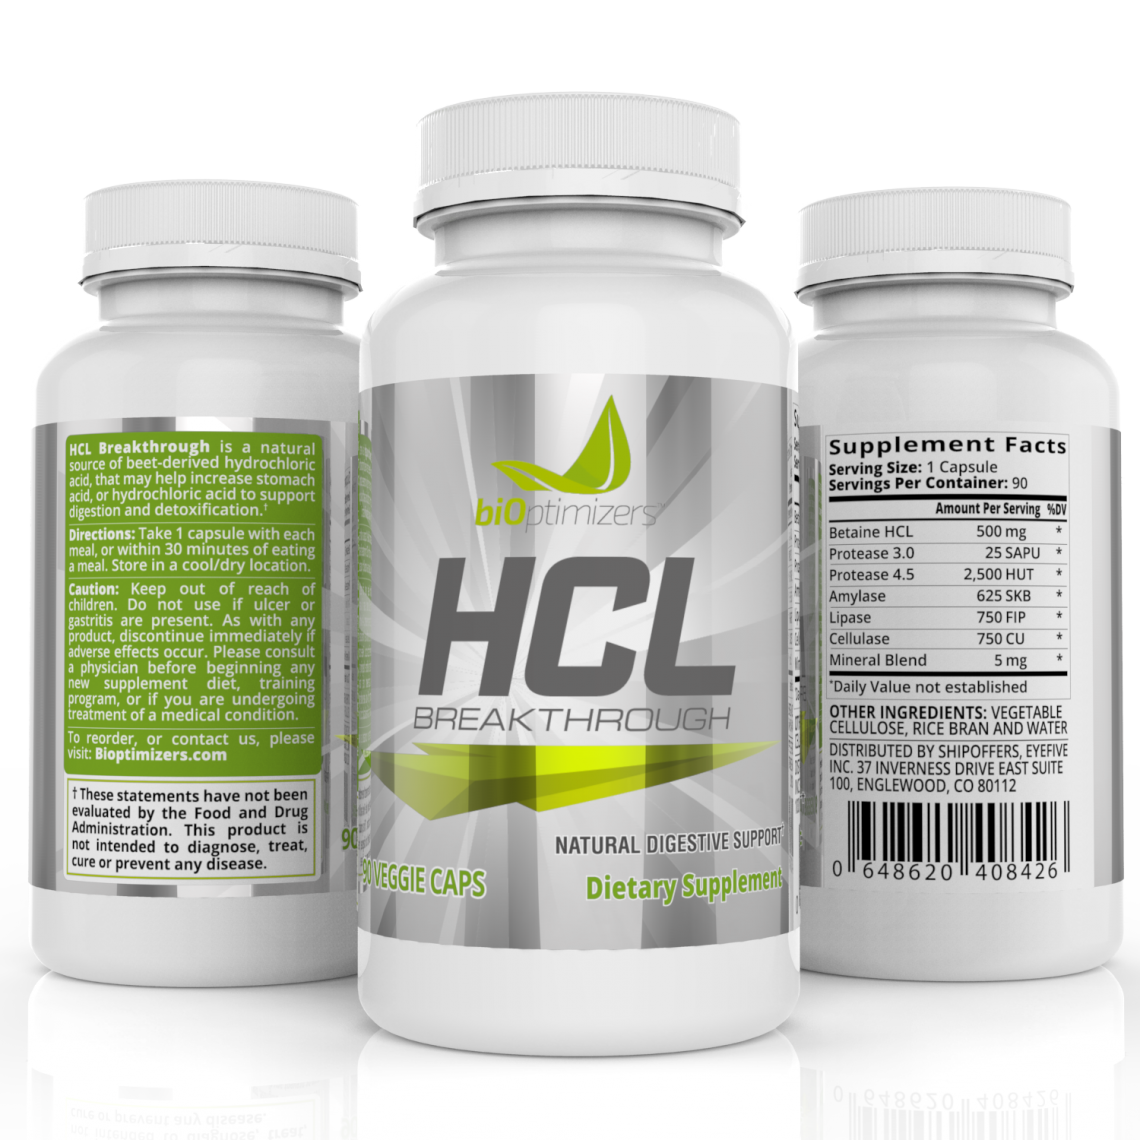 hcl-breakthrough-bioptimizers